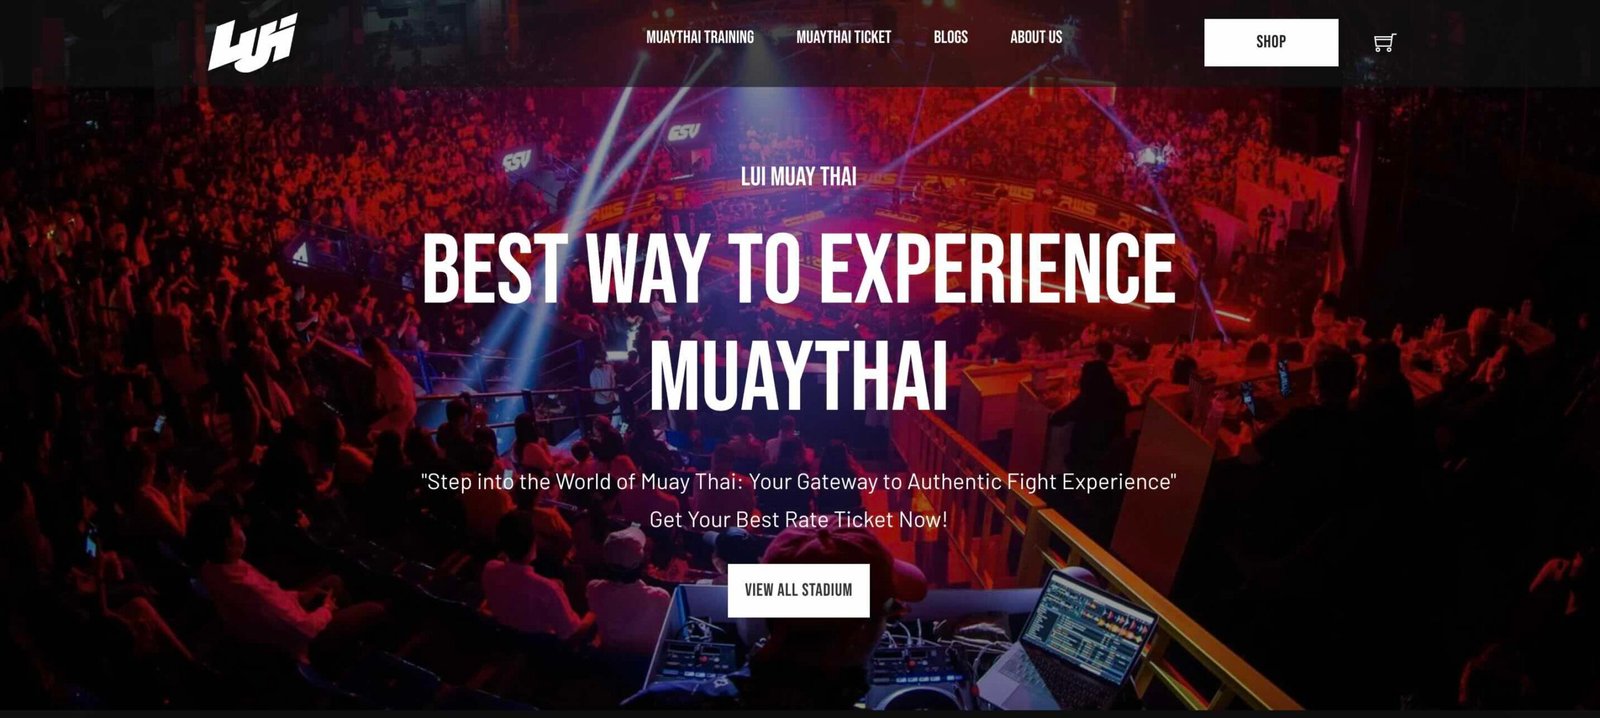 BEST WAY TO EXPERIENCE MUAYTHAI